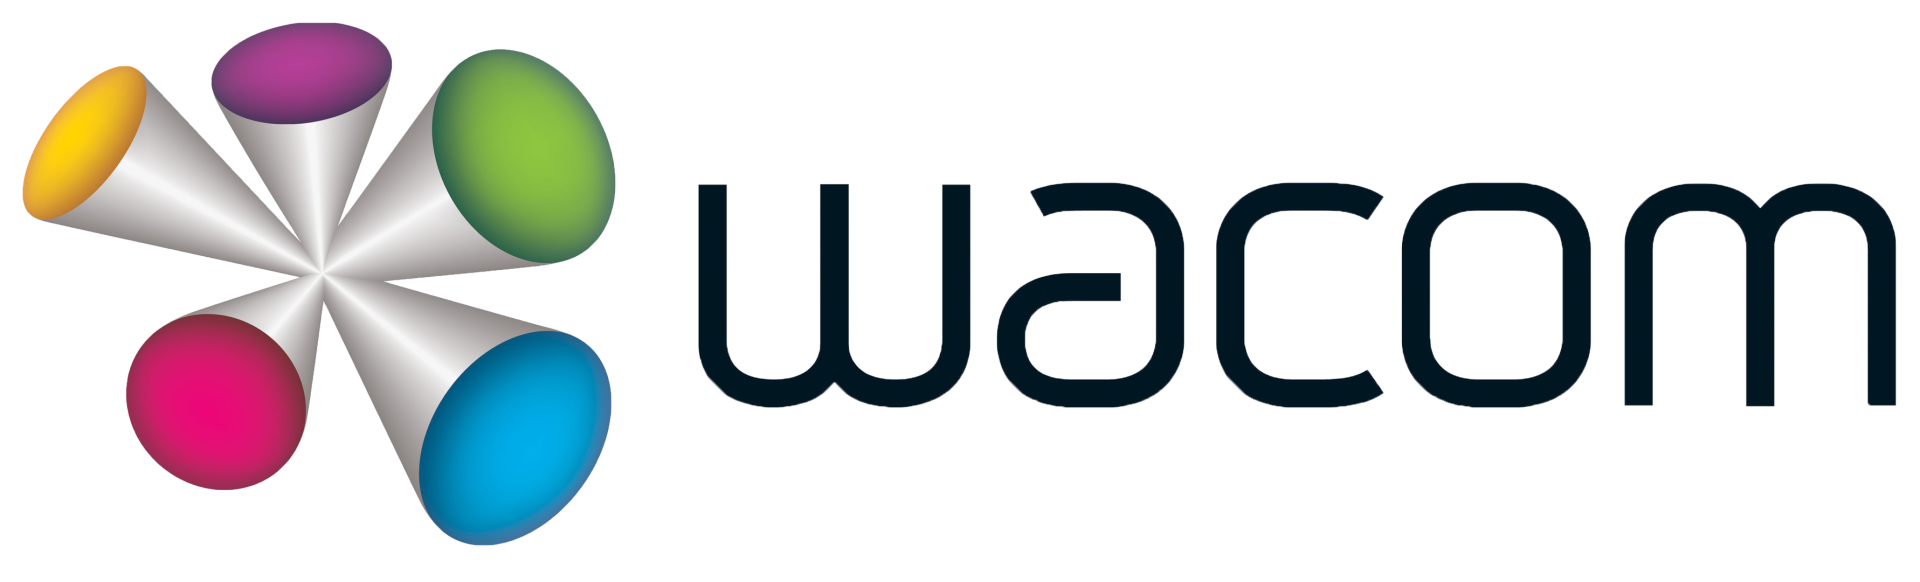 WACOM (ACK22207) BALLPOINT 1.0 REﬁLL (3 PACK)